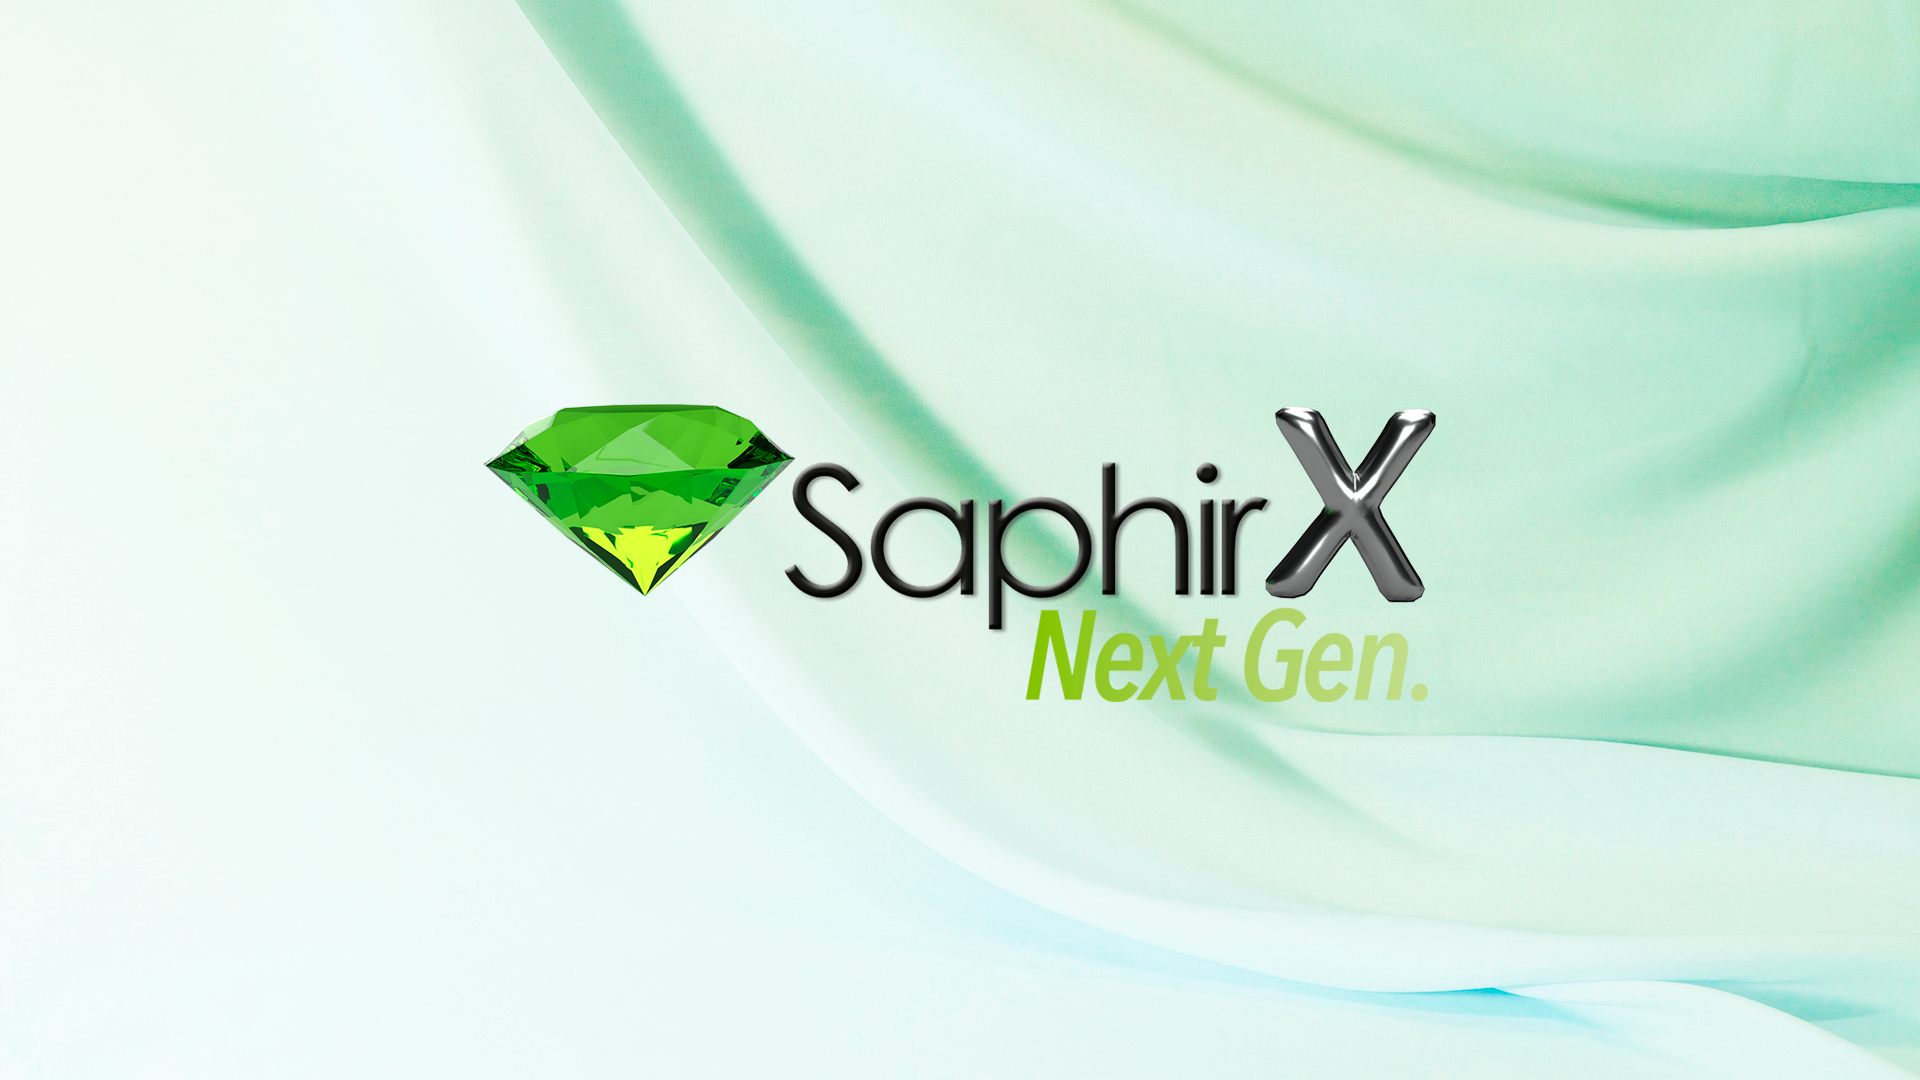 Saphirx Next Gen